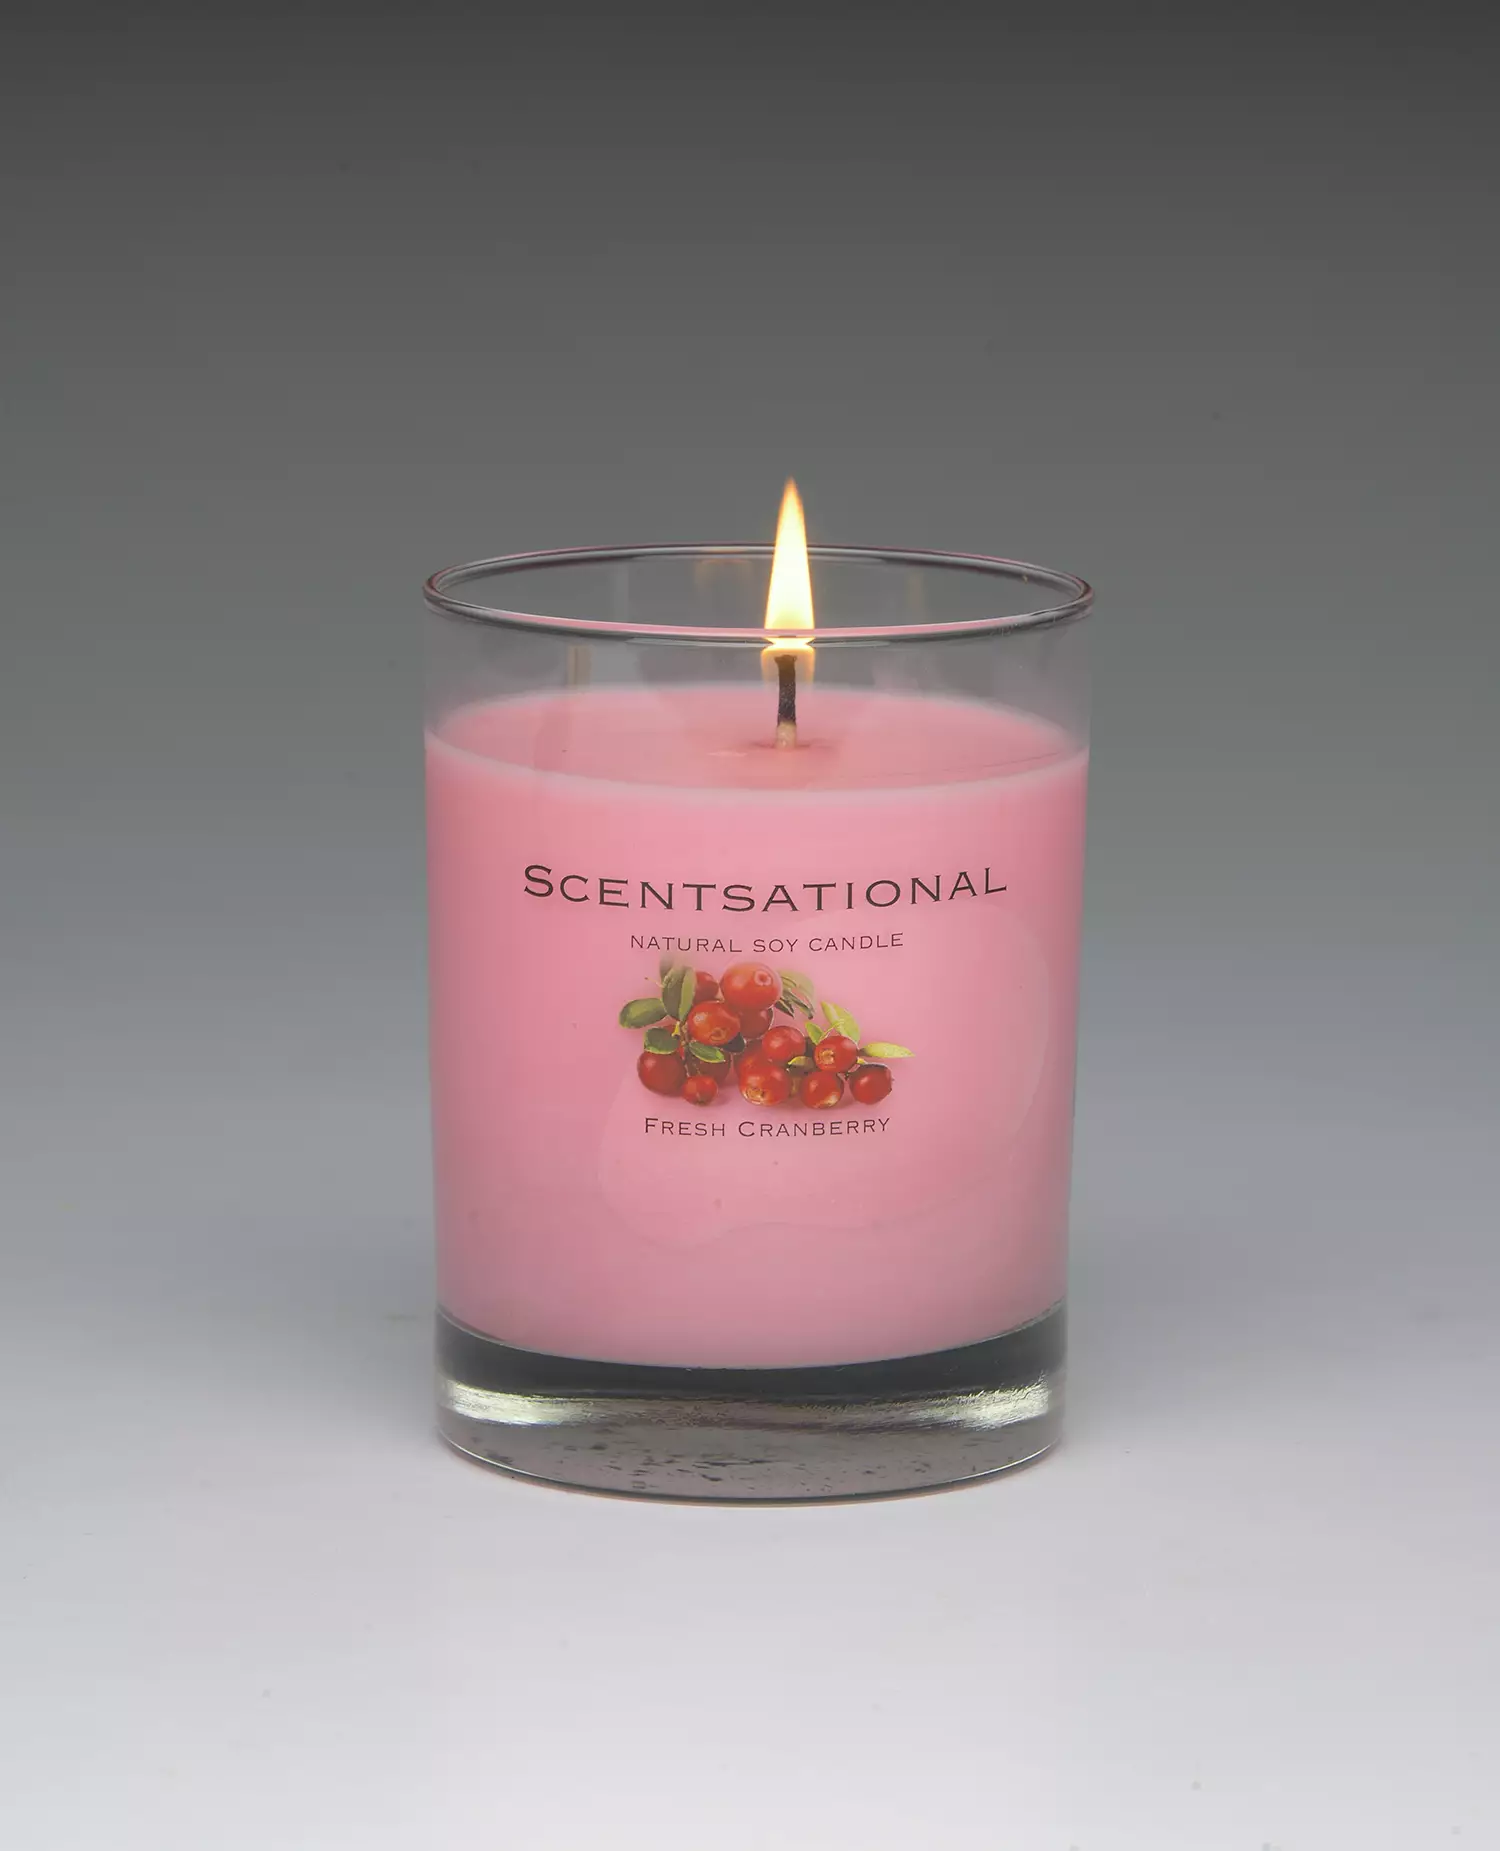 Fresh Cranberry – 11oz scented candle burning